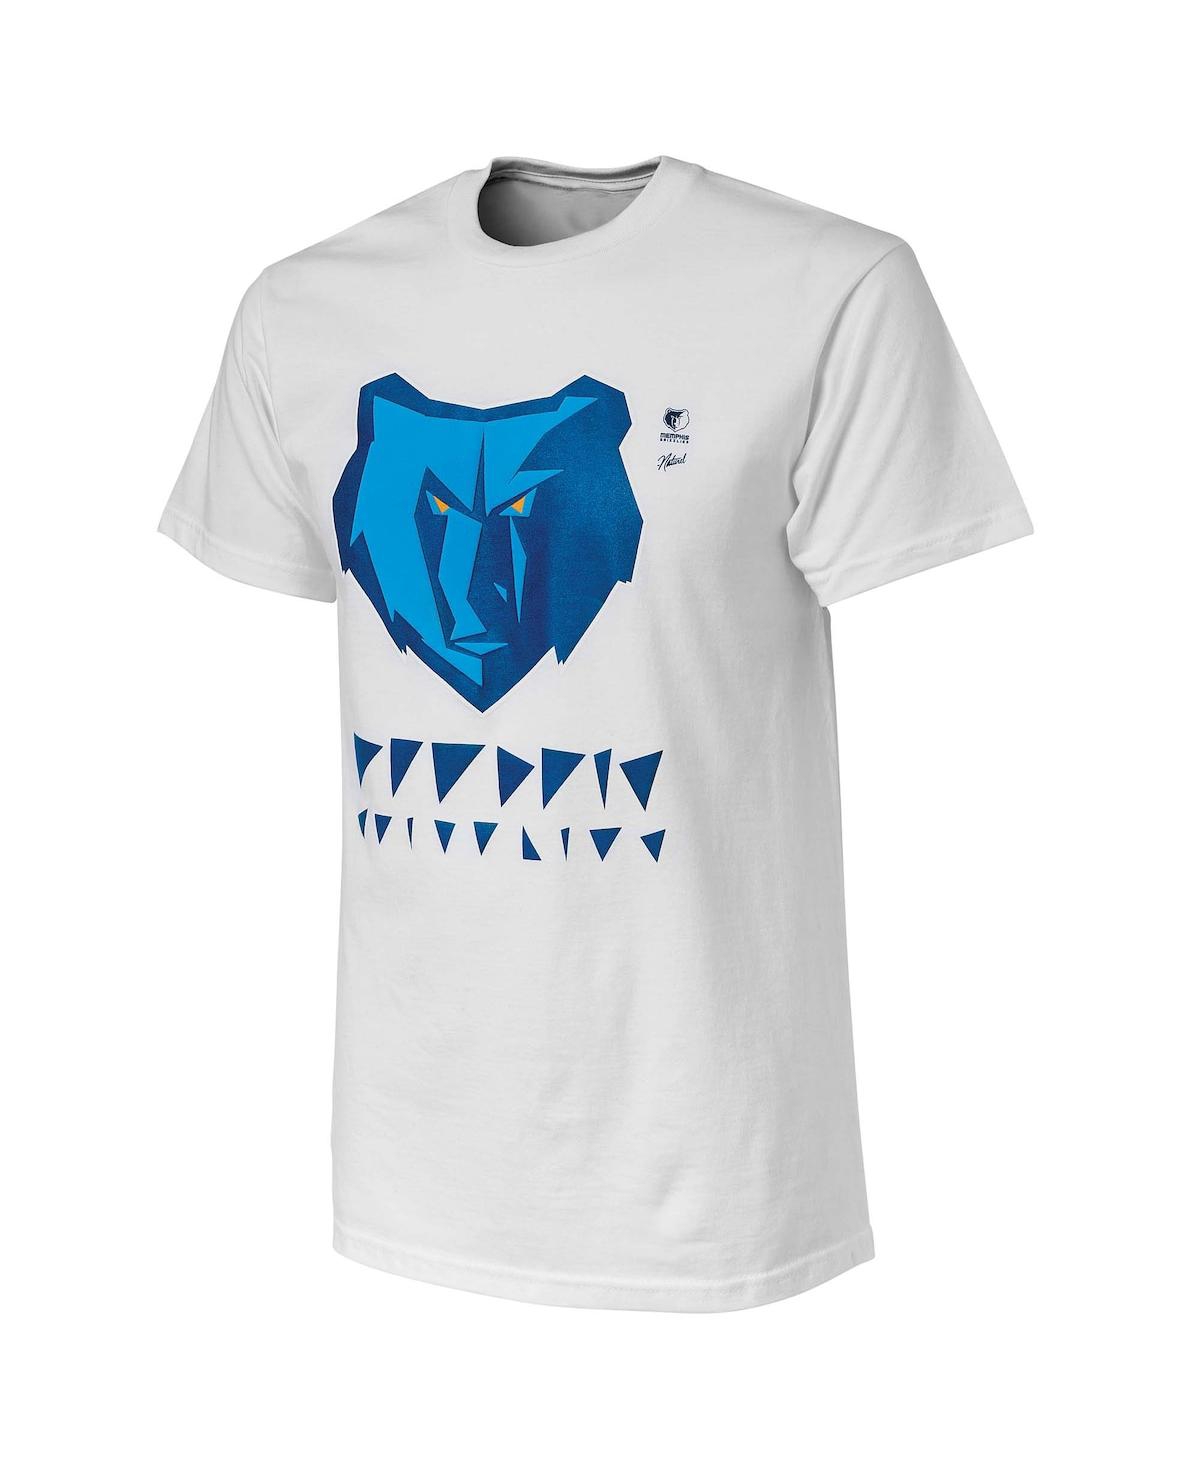 Shop Nba Exclusive Collection Men's Nba X Naturel White Memphis Grizzlies No Caller Id T-shirt